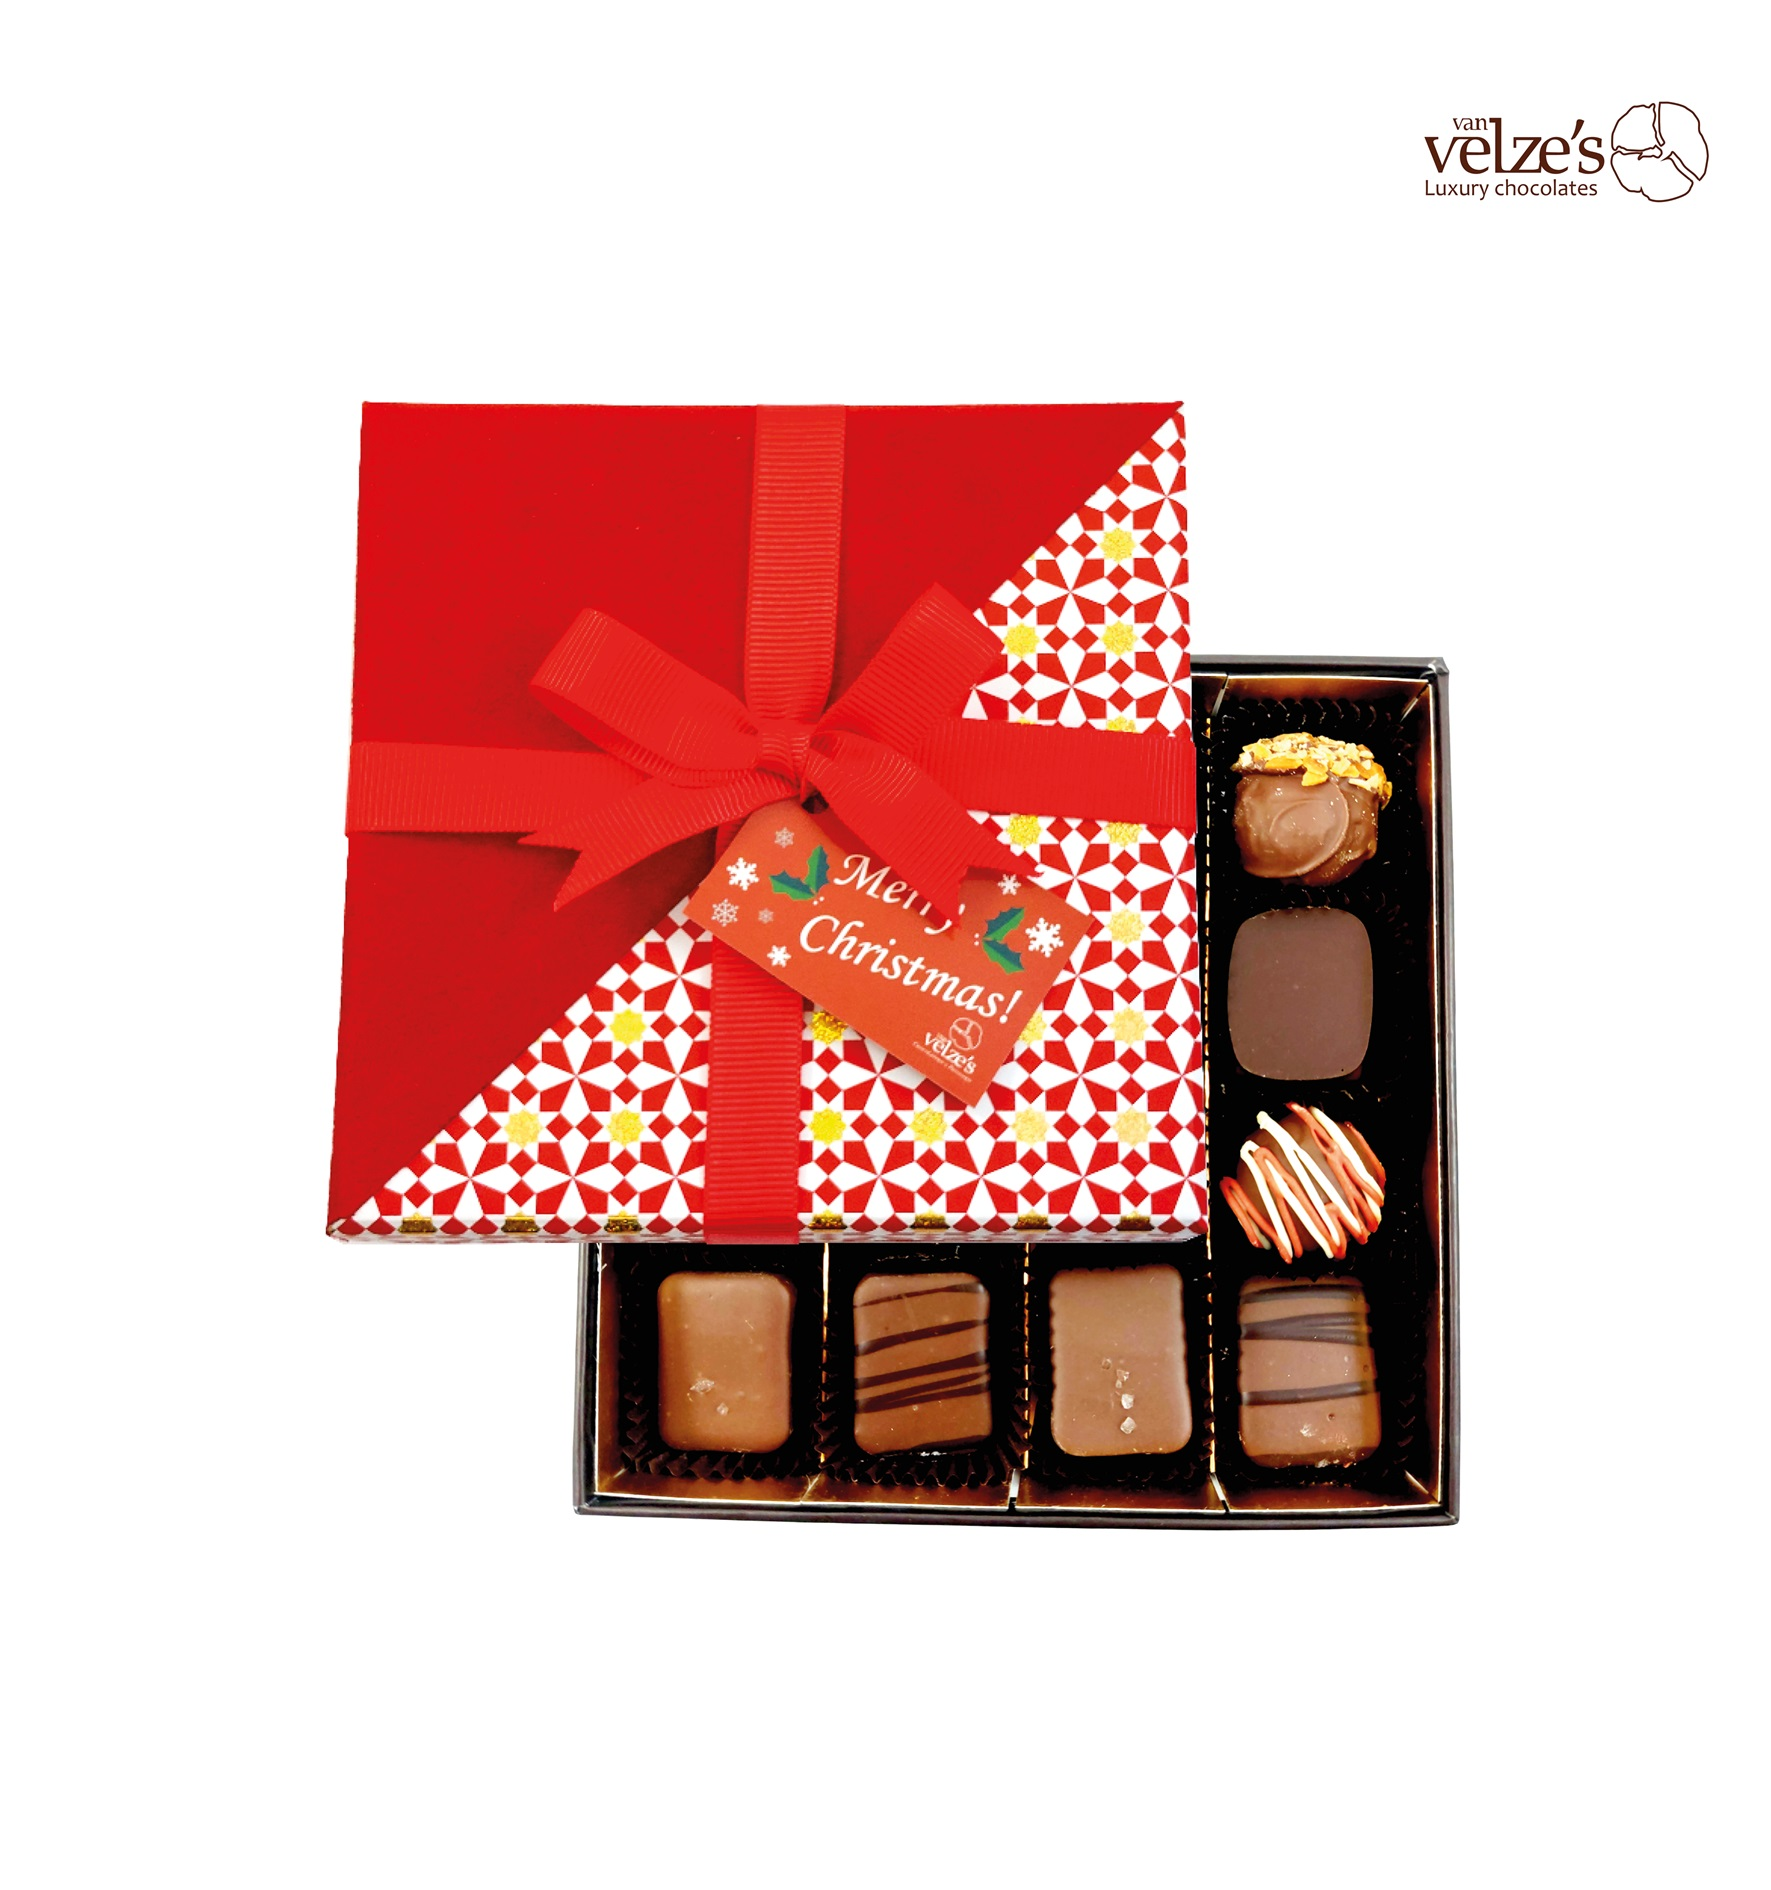 Christmas collection - Van Velze'Chocolates